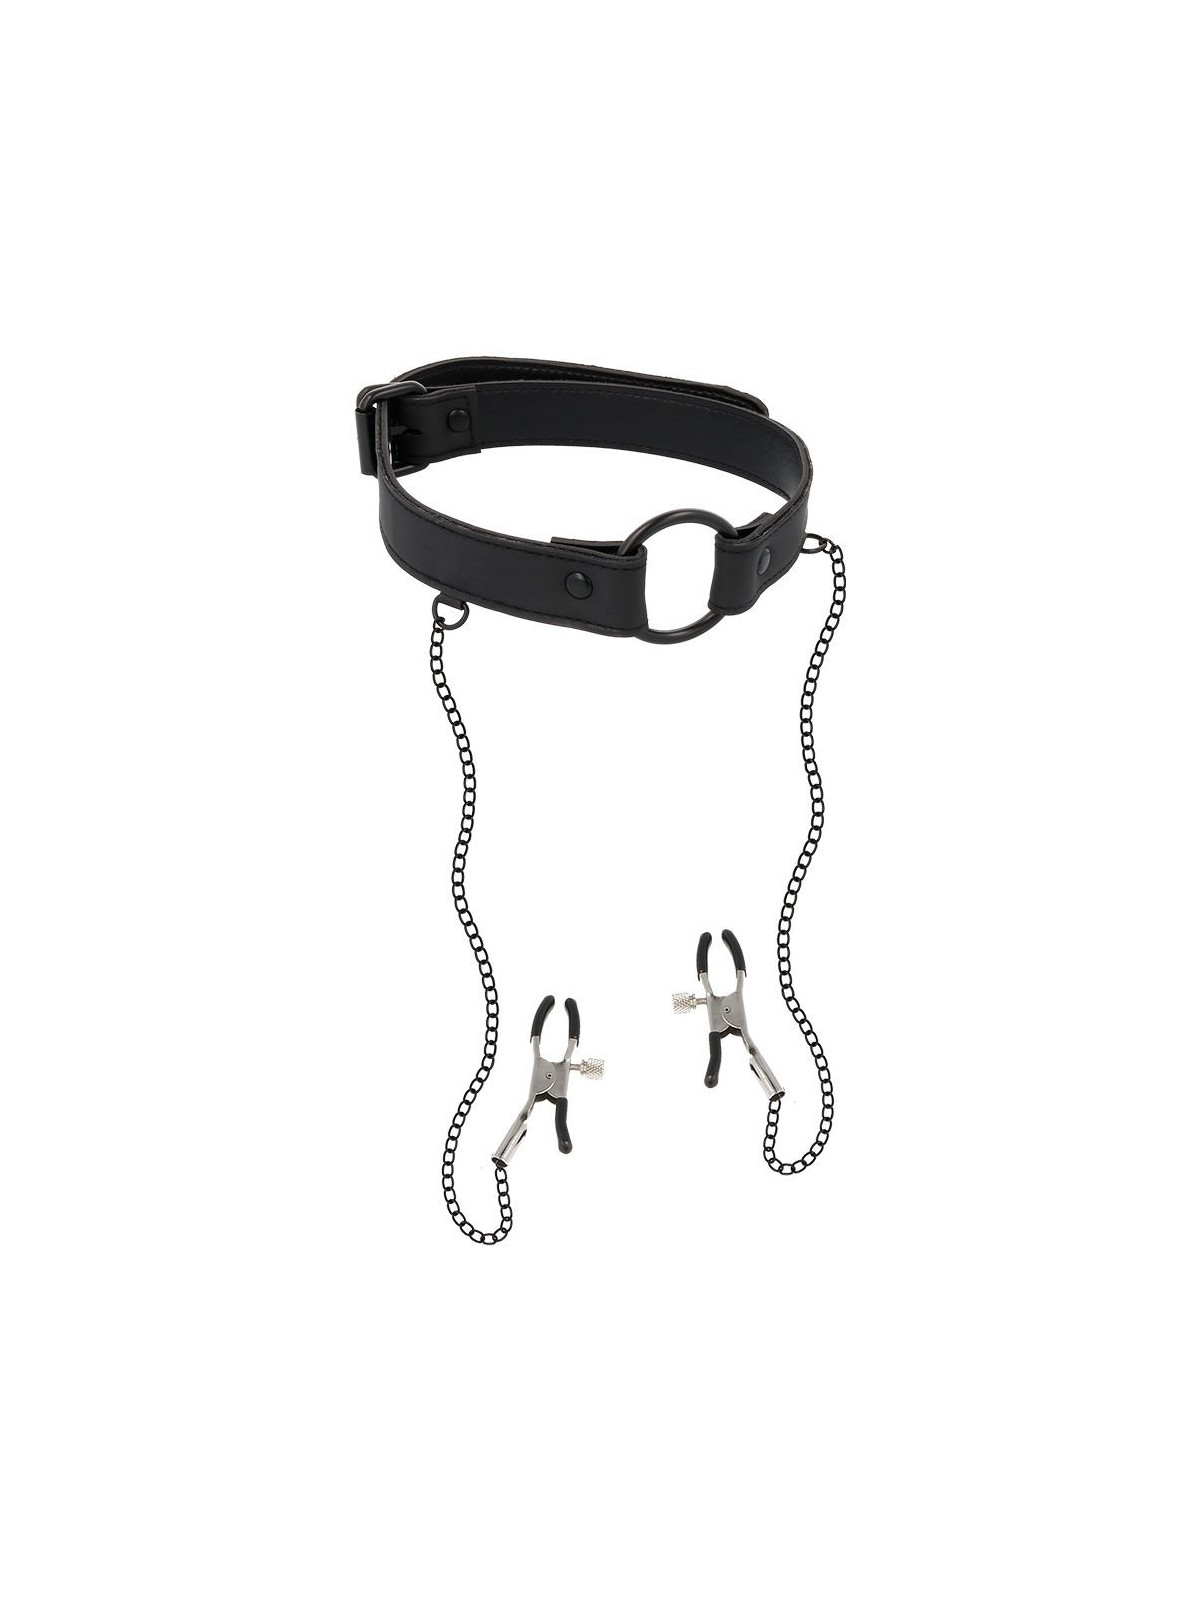 Fetish Submissive Collar Con Pinzas Para Pezones - Comprar Collar BDSM Fetish Submissive - Collares BDSM (1)